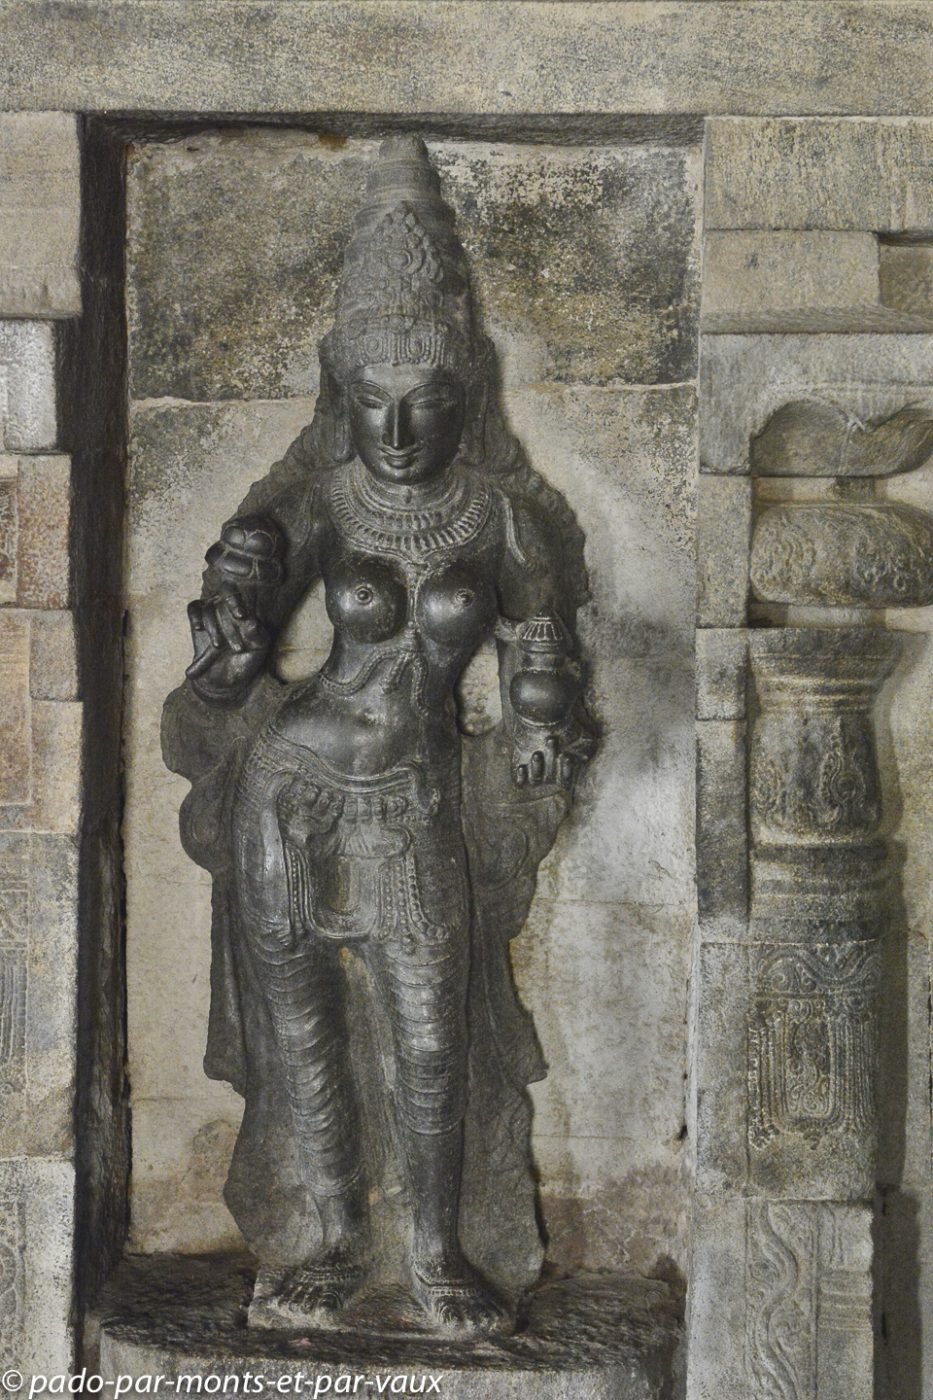 Temple Airavateshwara